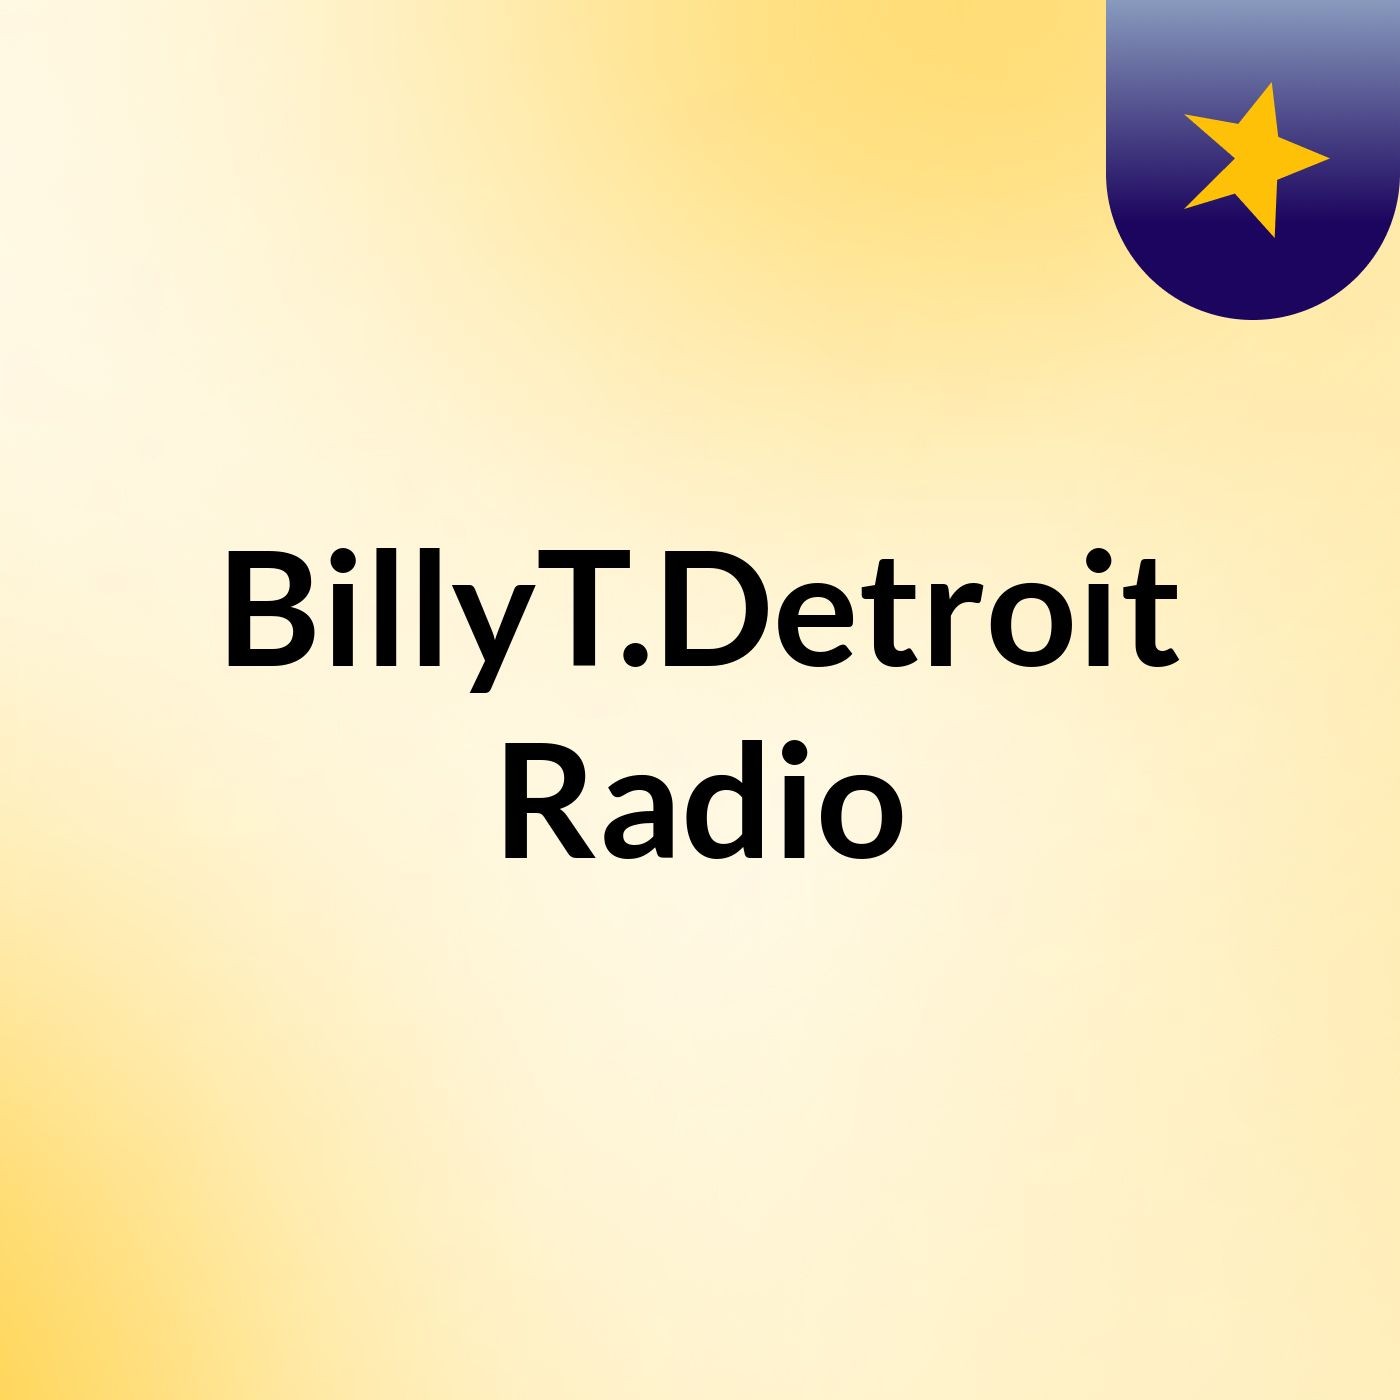 BillyT.Detroit Radio